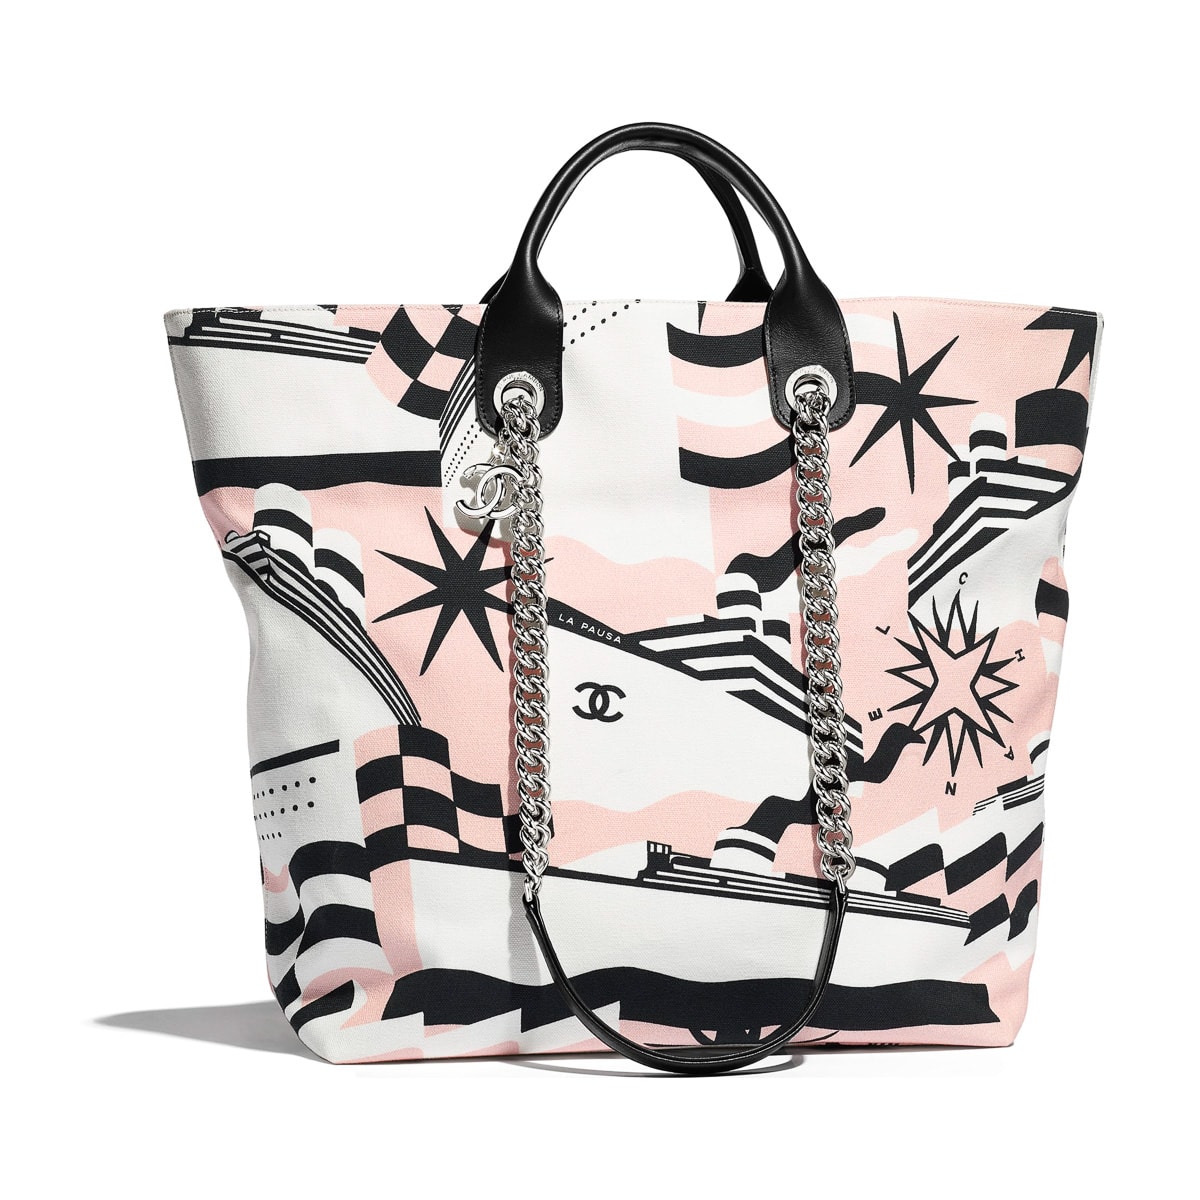 Chanel's Cruise 19 Lifesaver Bag - BagAddicts Anonymous